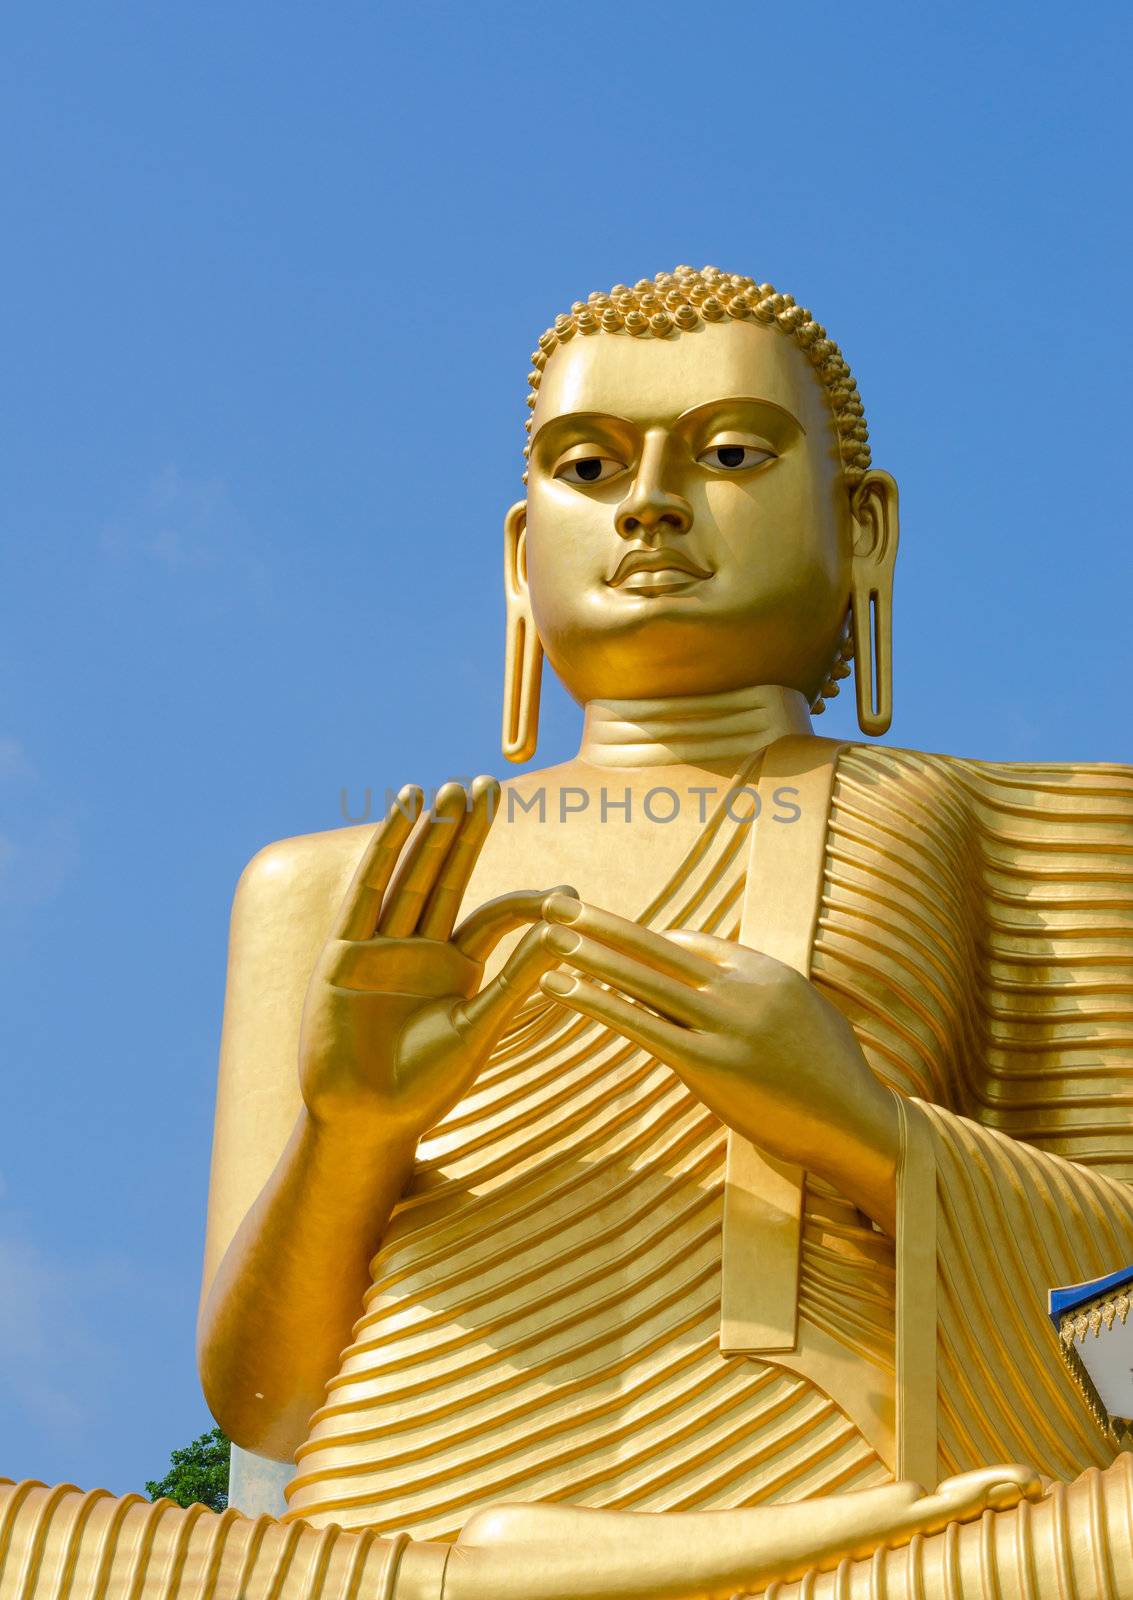 Golden yellow Buddha statue on blue sky background